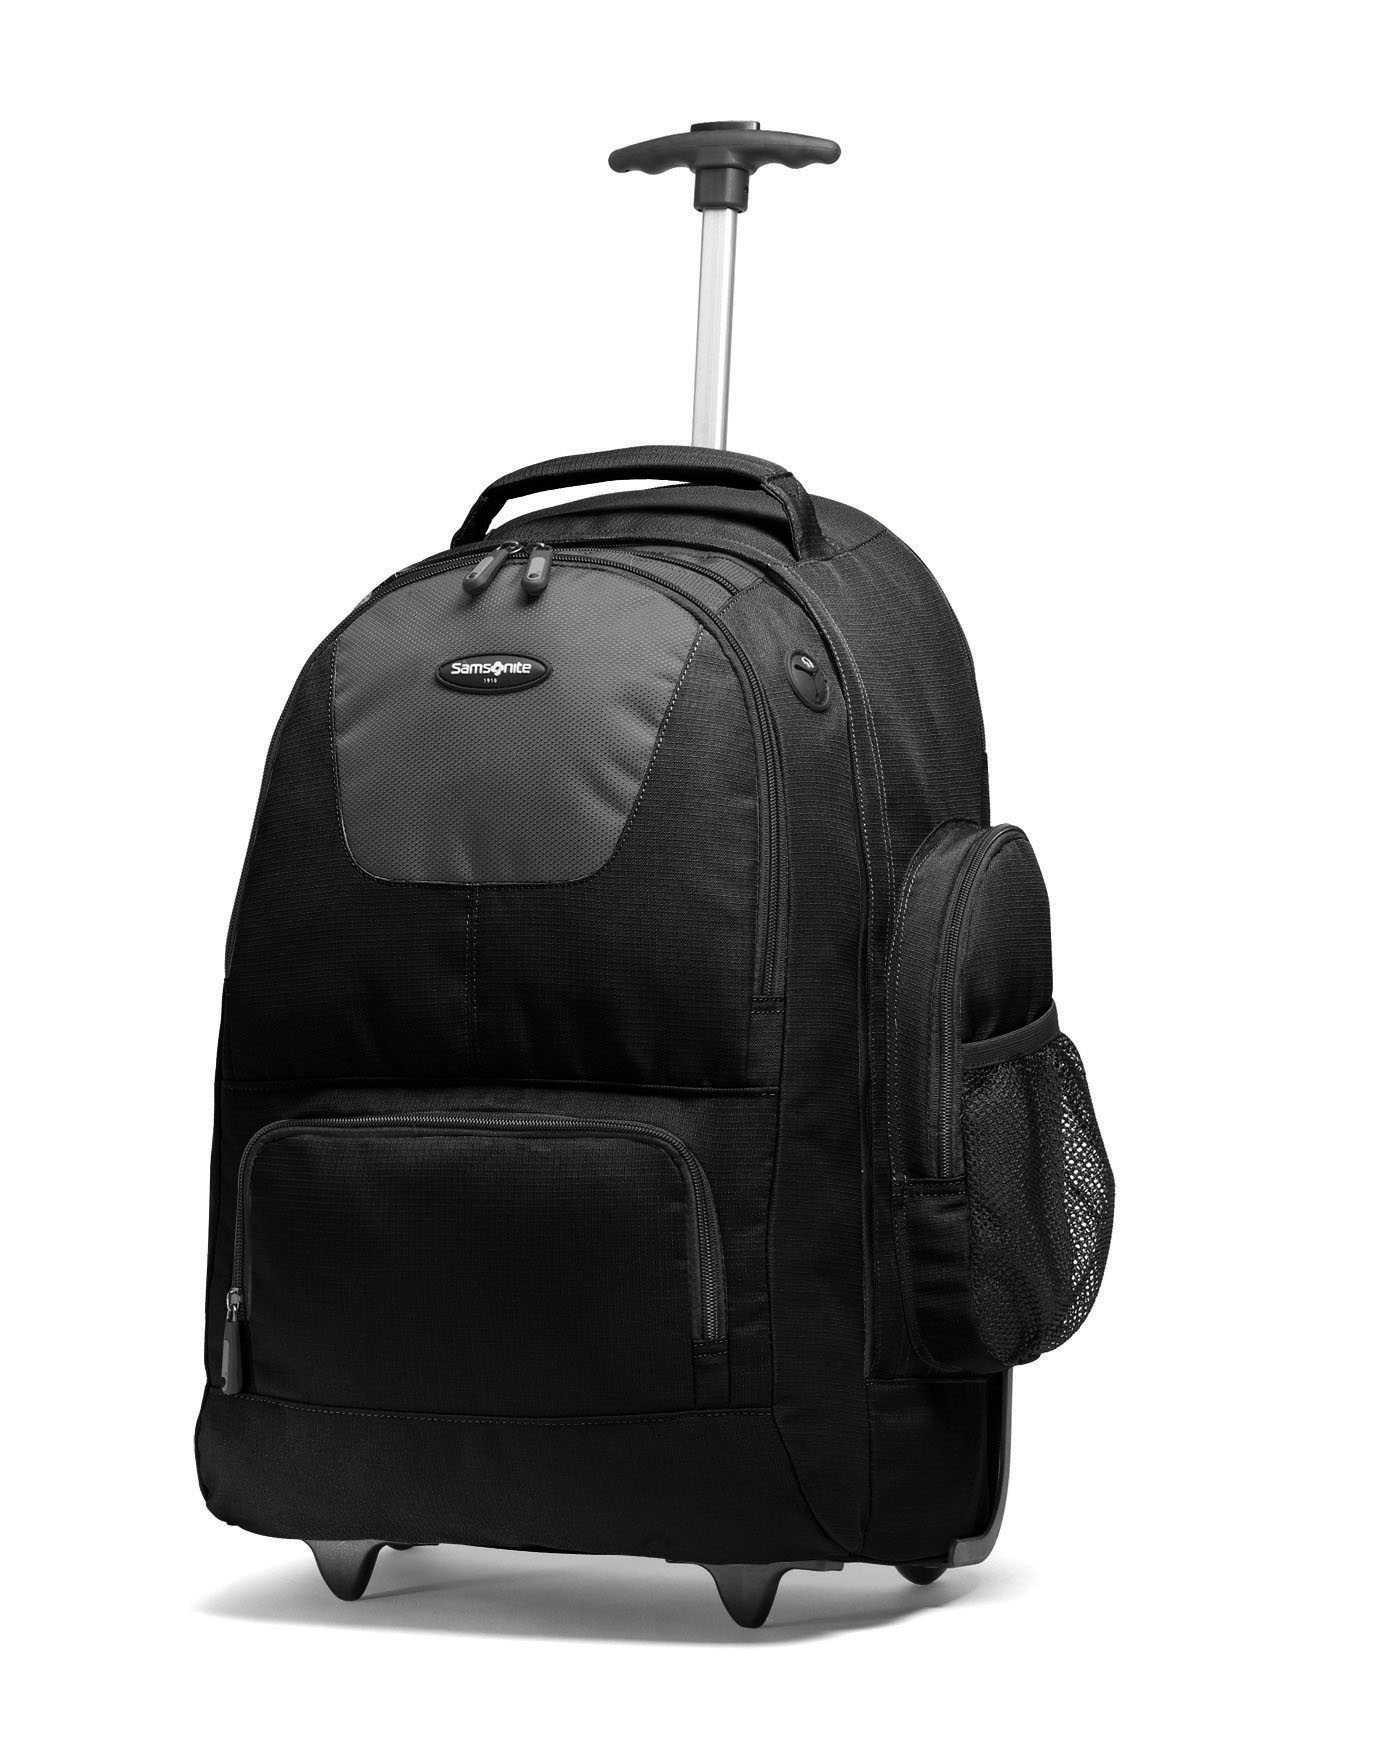 Samsonite luggage Div Rolling Backpack, 14 X 8 X 21, Black/charcoal - image 1 of 2